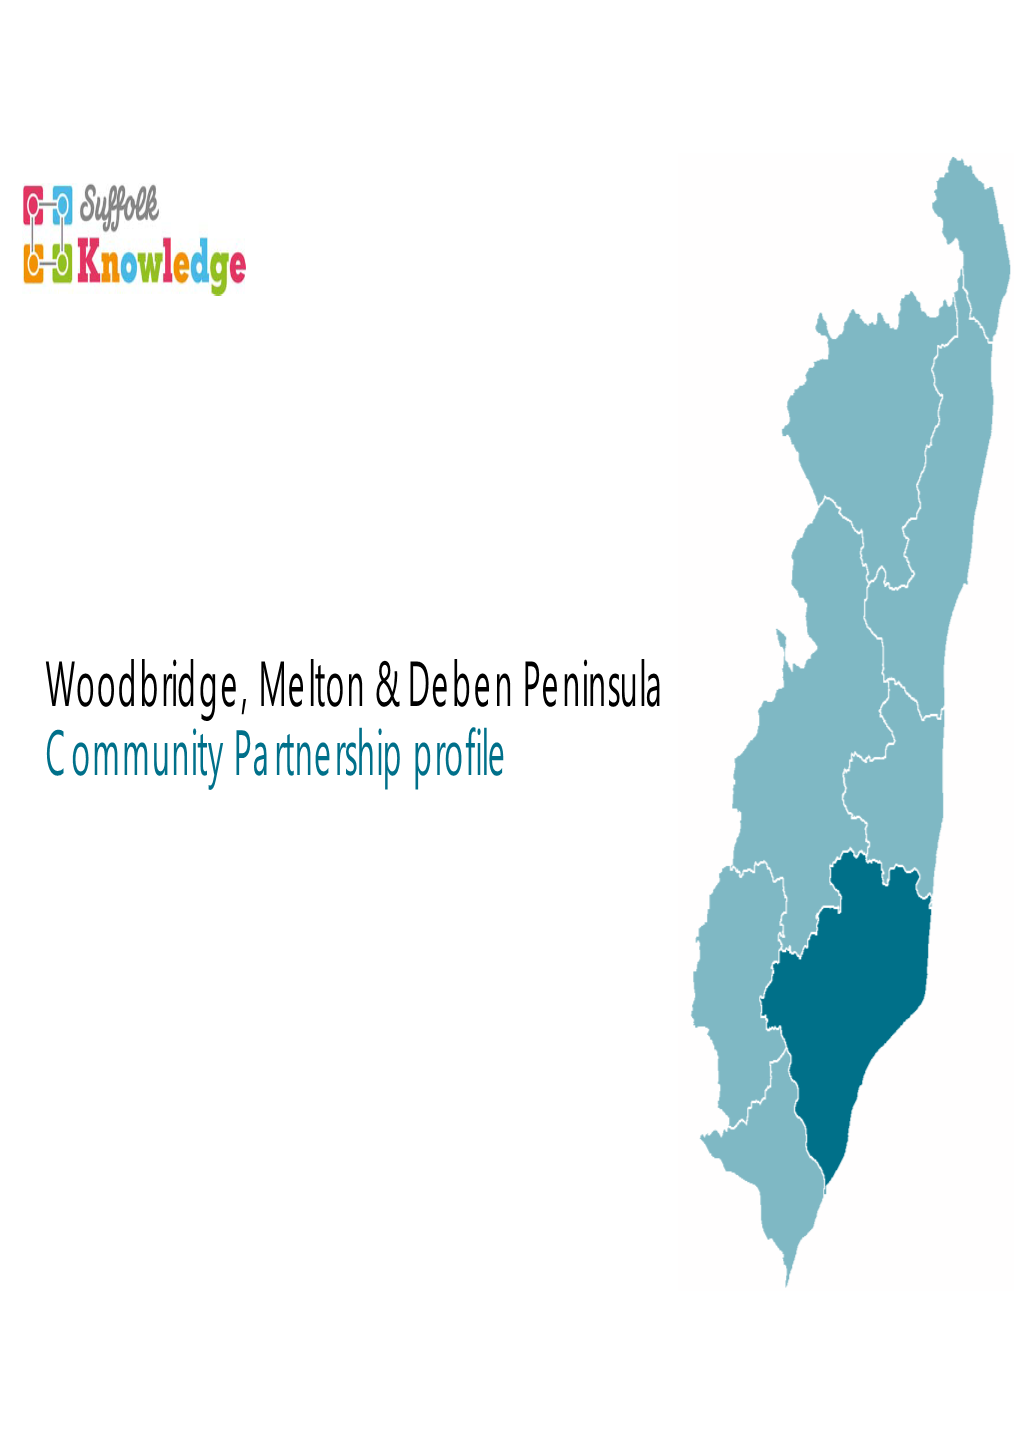 Woodbridge, Melton & Deben Peninsula